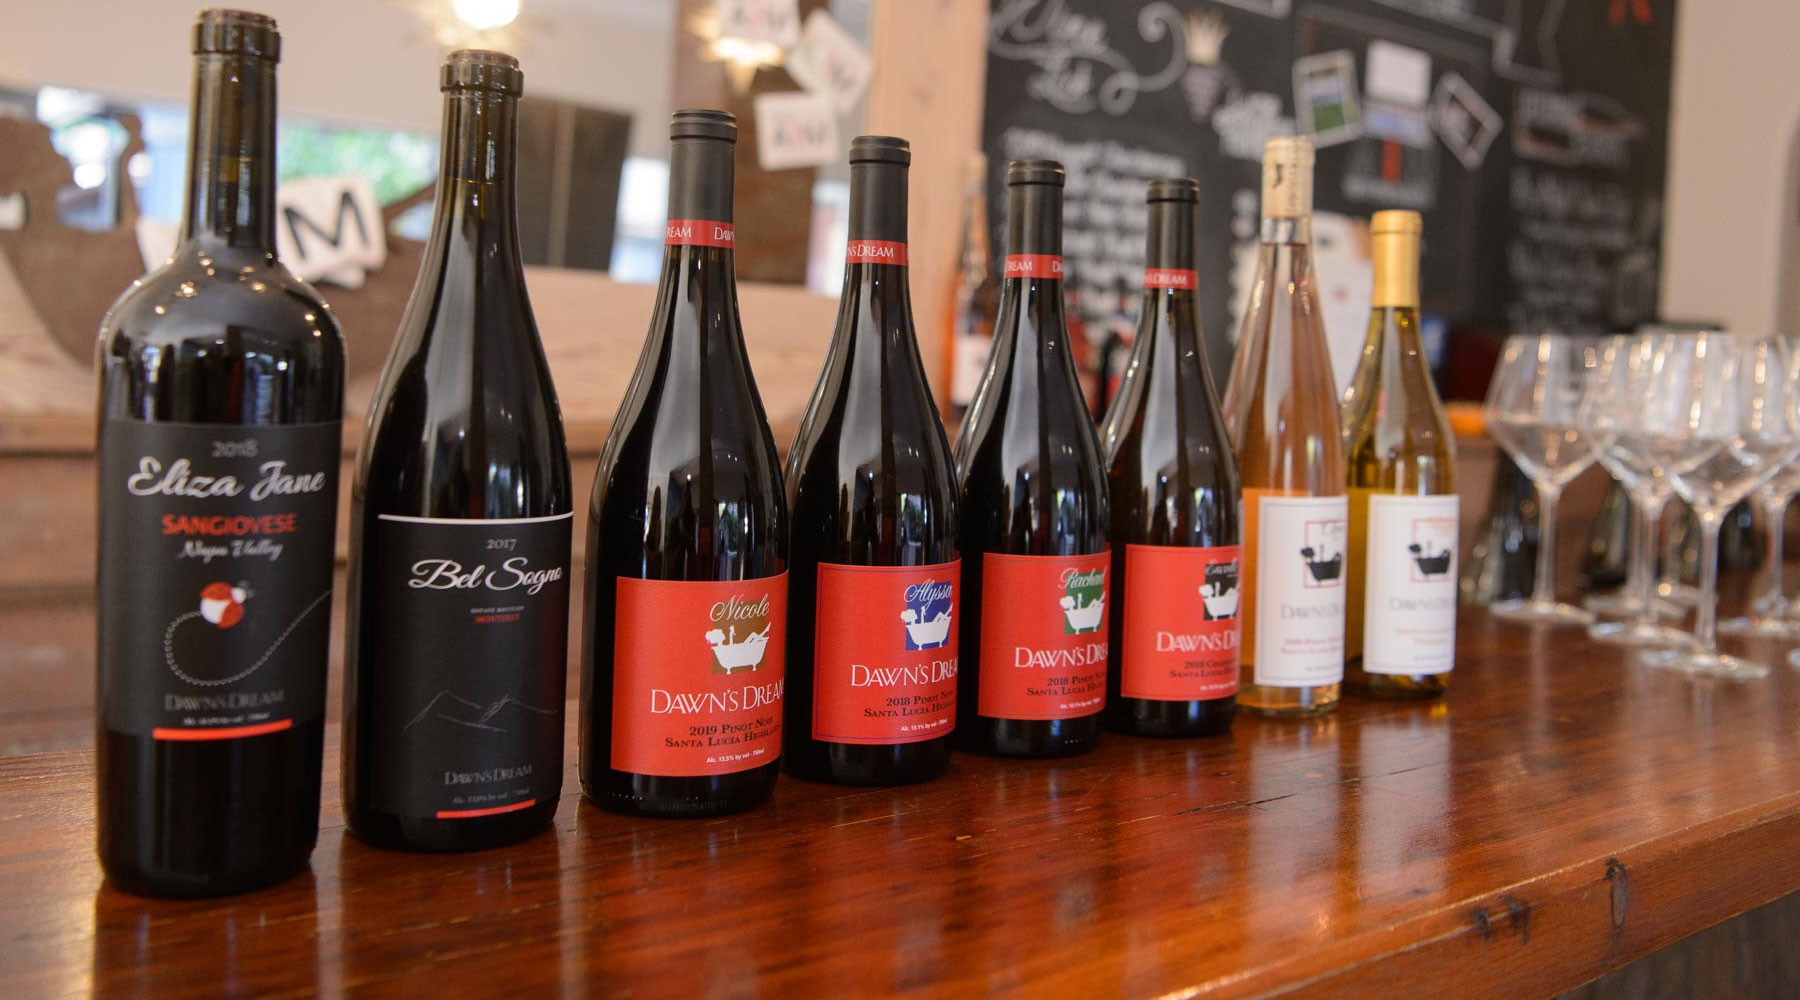 Wine bottles lined up on a wine bar